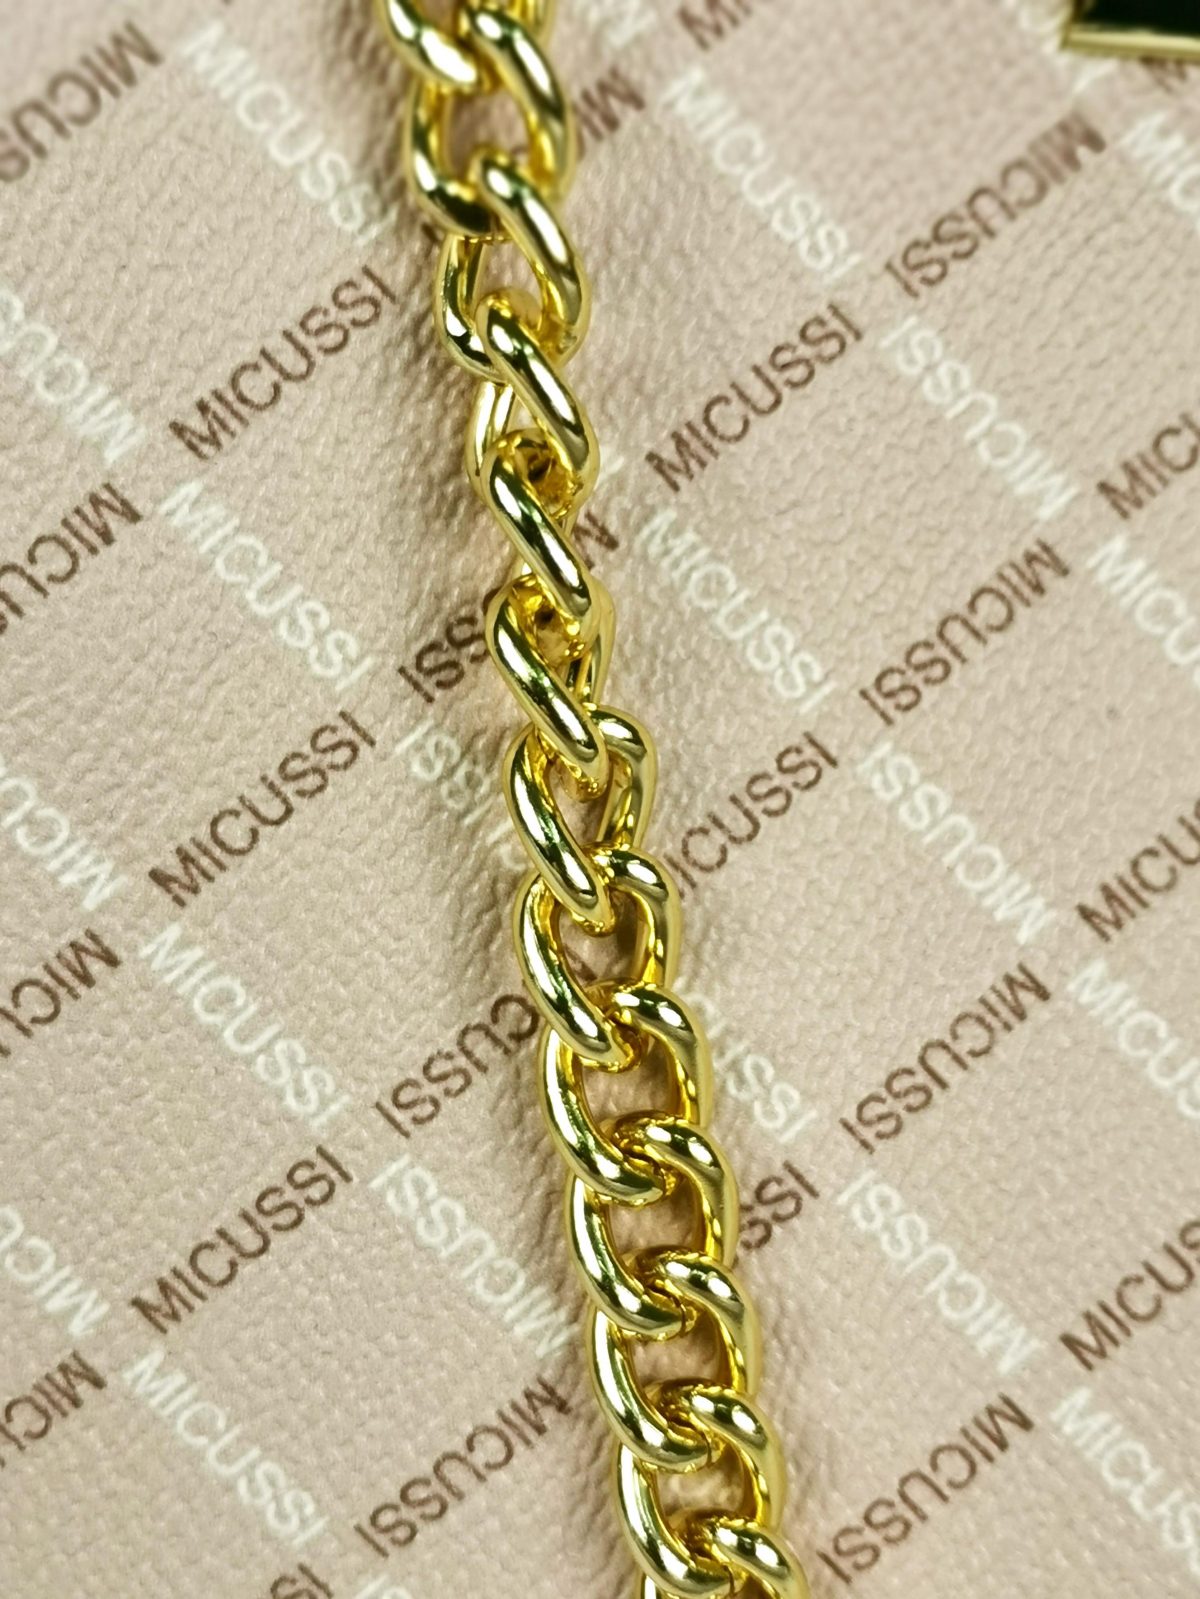 Beige shoulder bag with gold chain